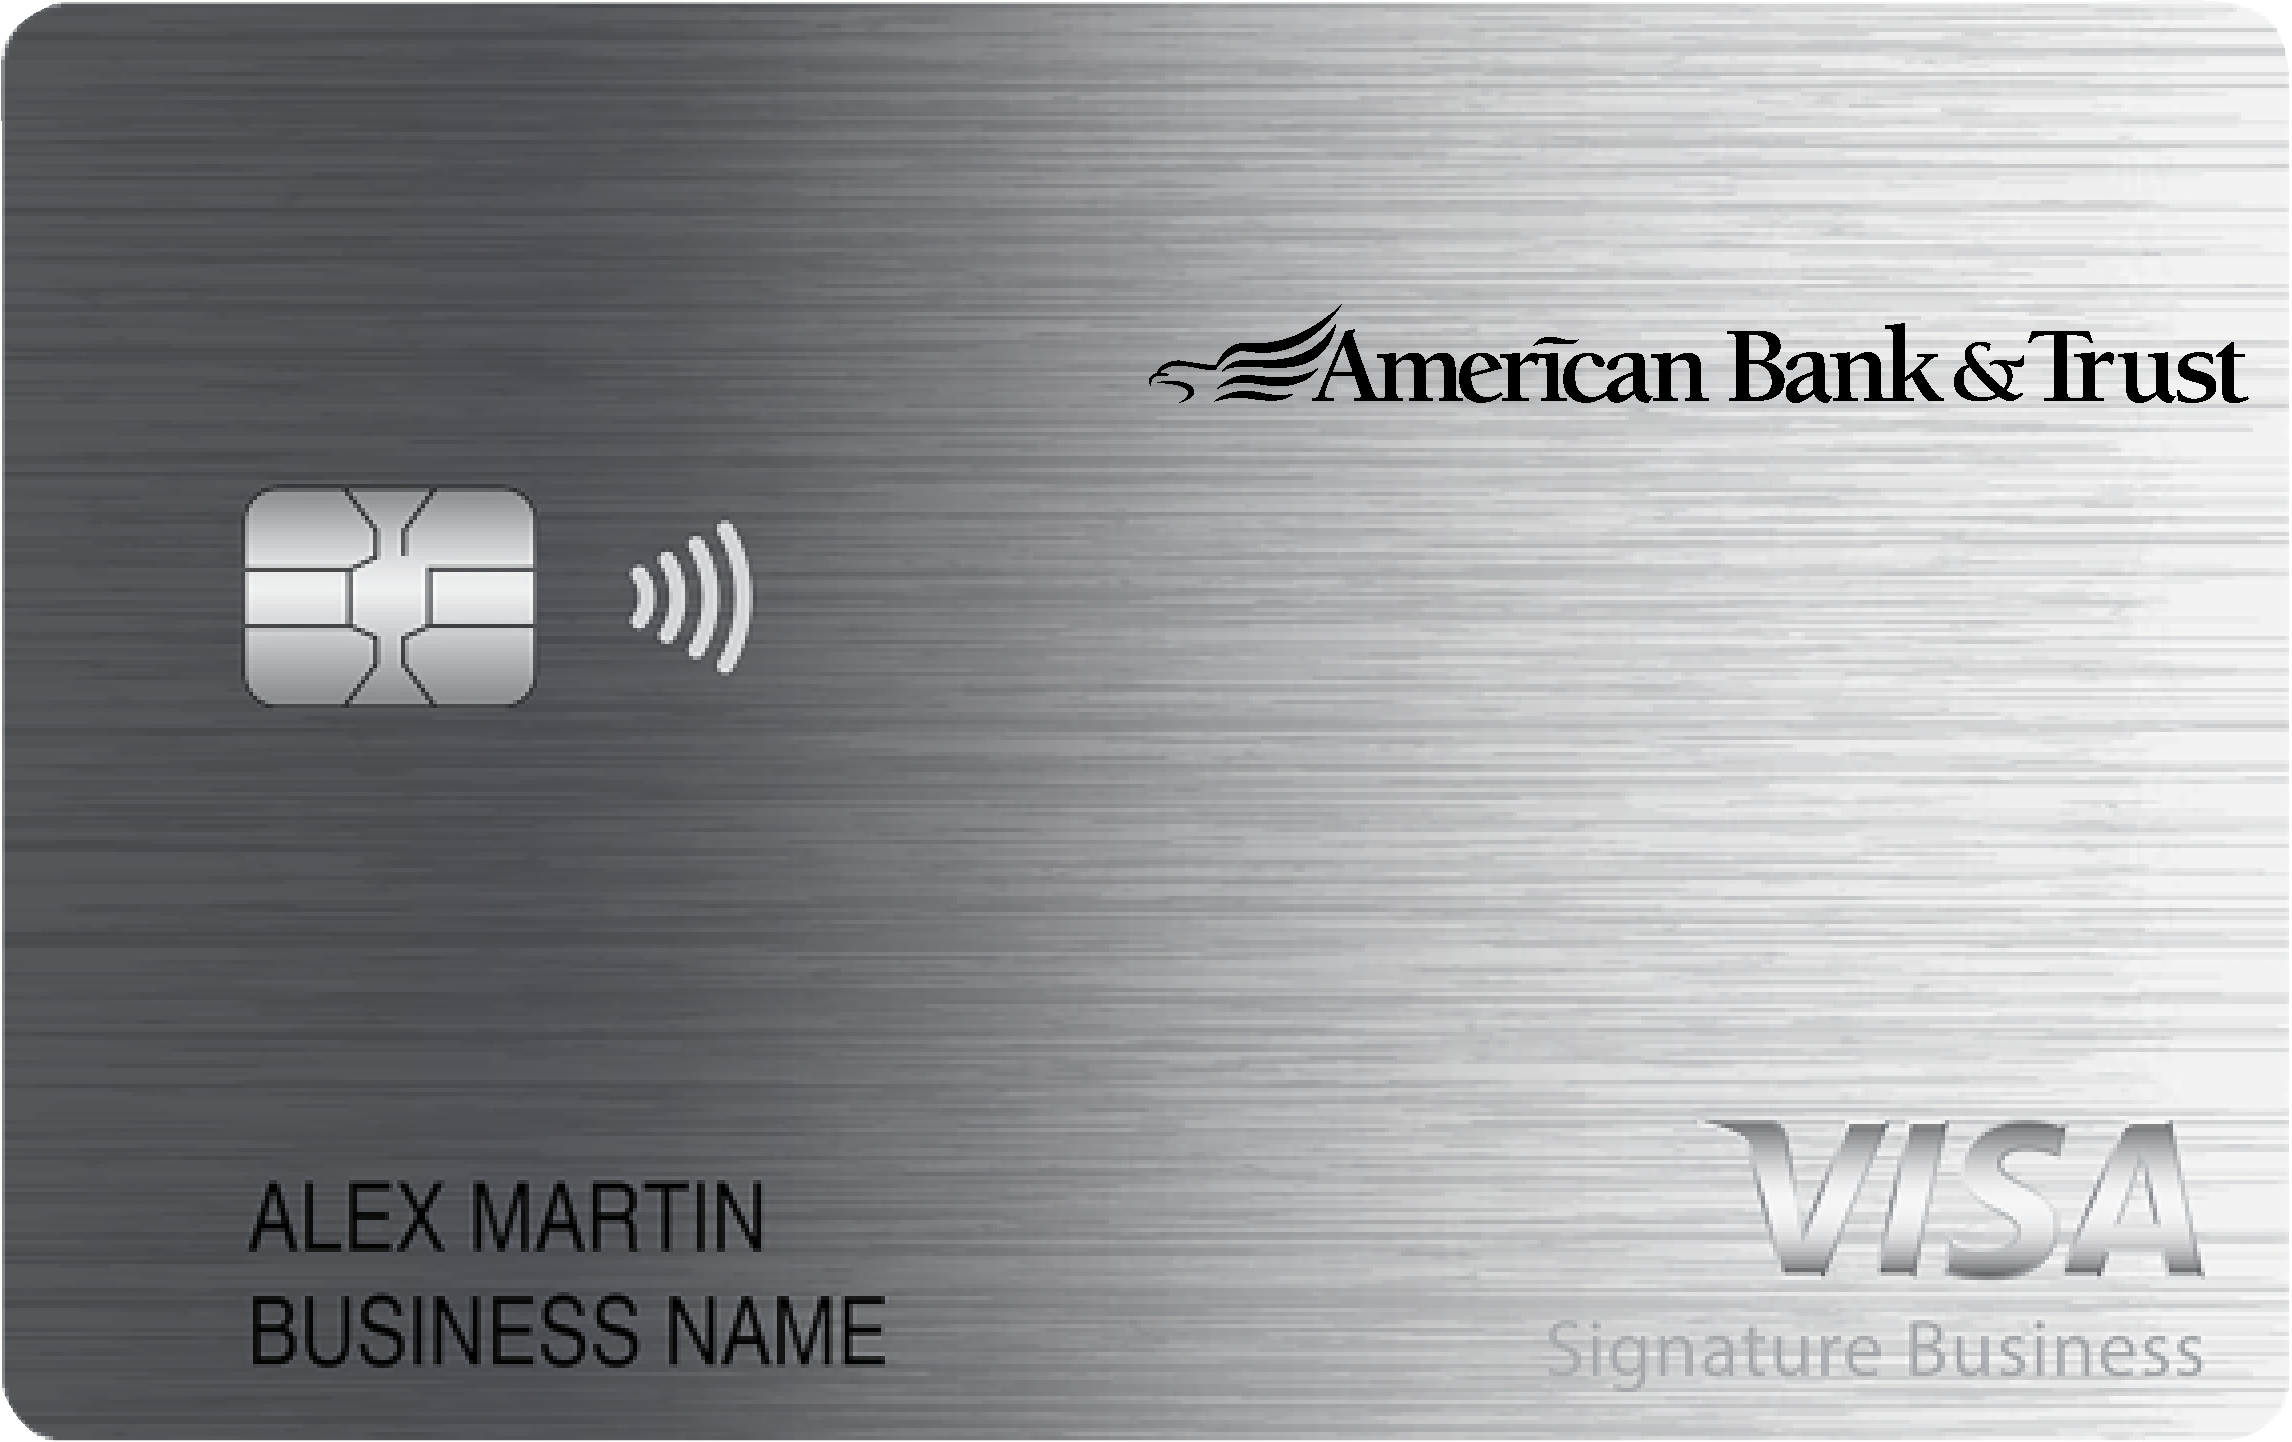 American Bank & Trust Smart Business Rewards Card